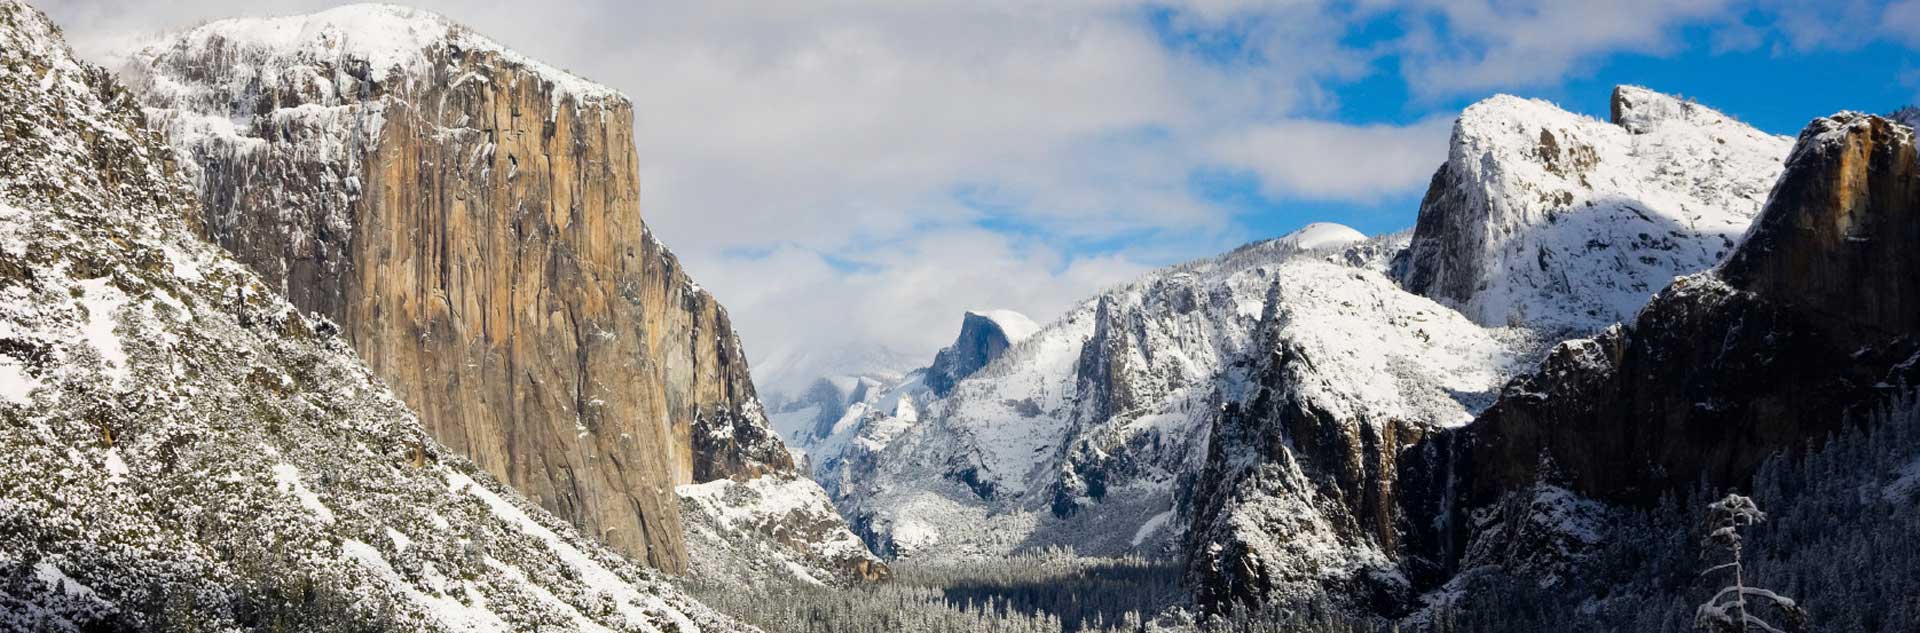 Yosemite Valley in winter